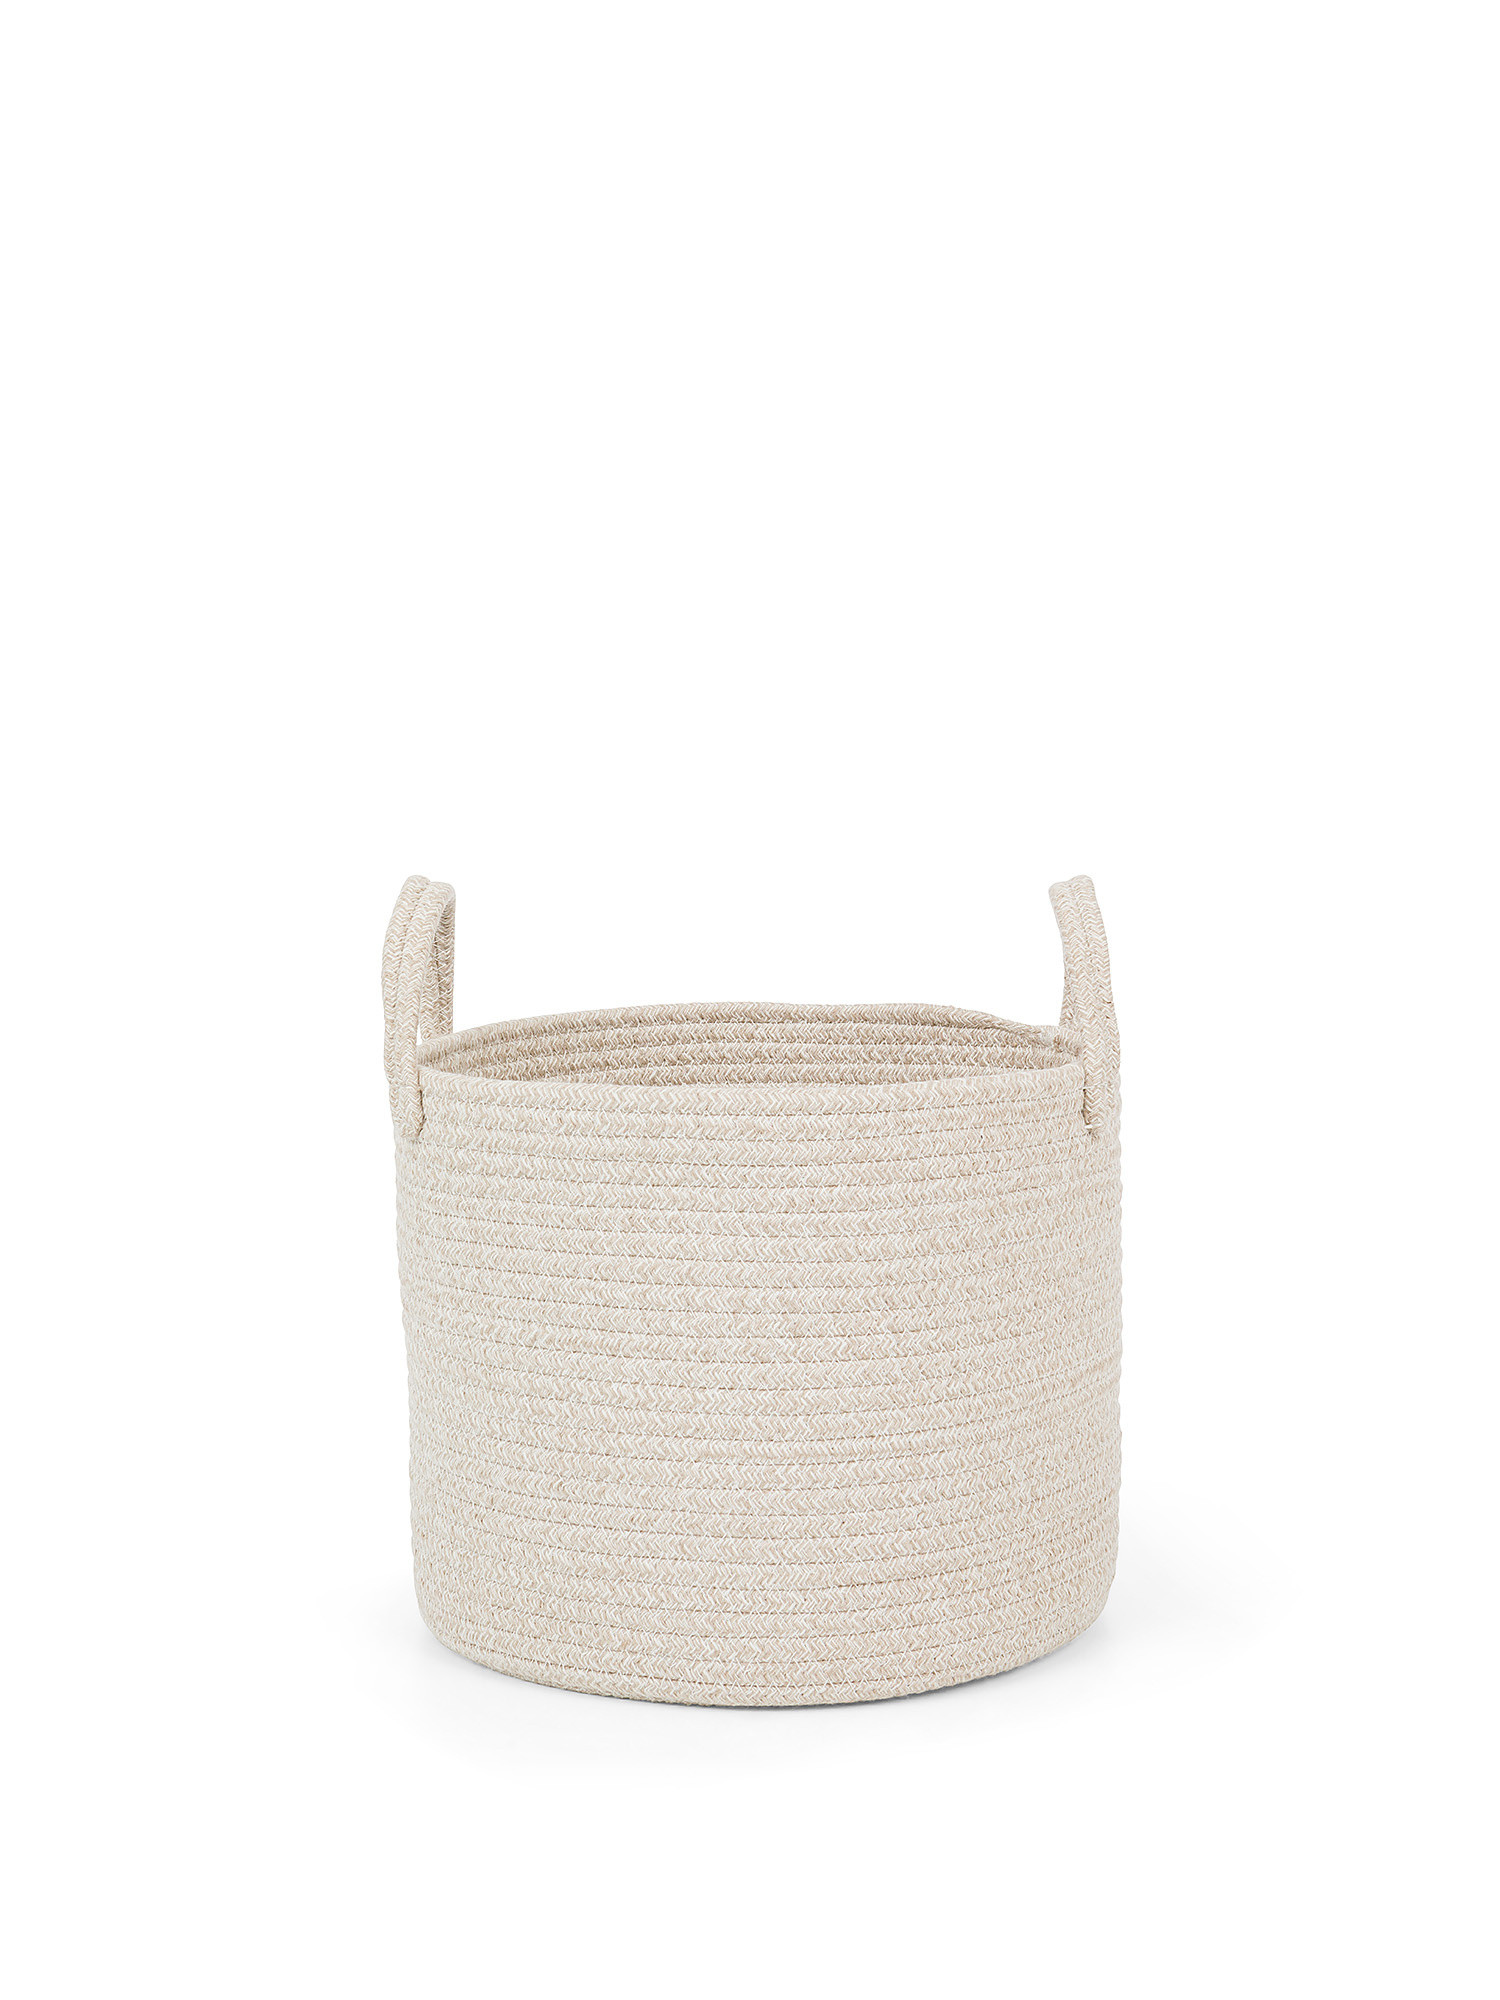 Rope basket with handles, Beige, large image number 0